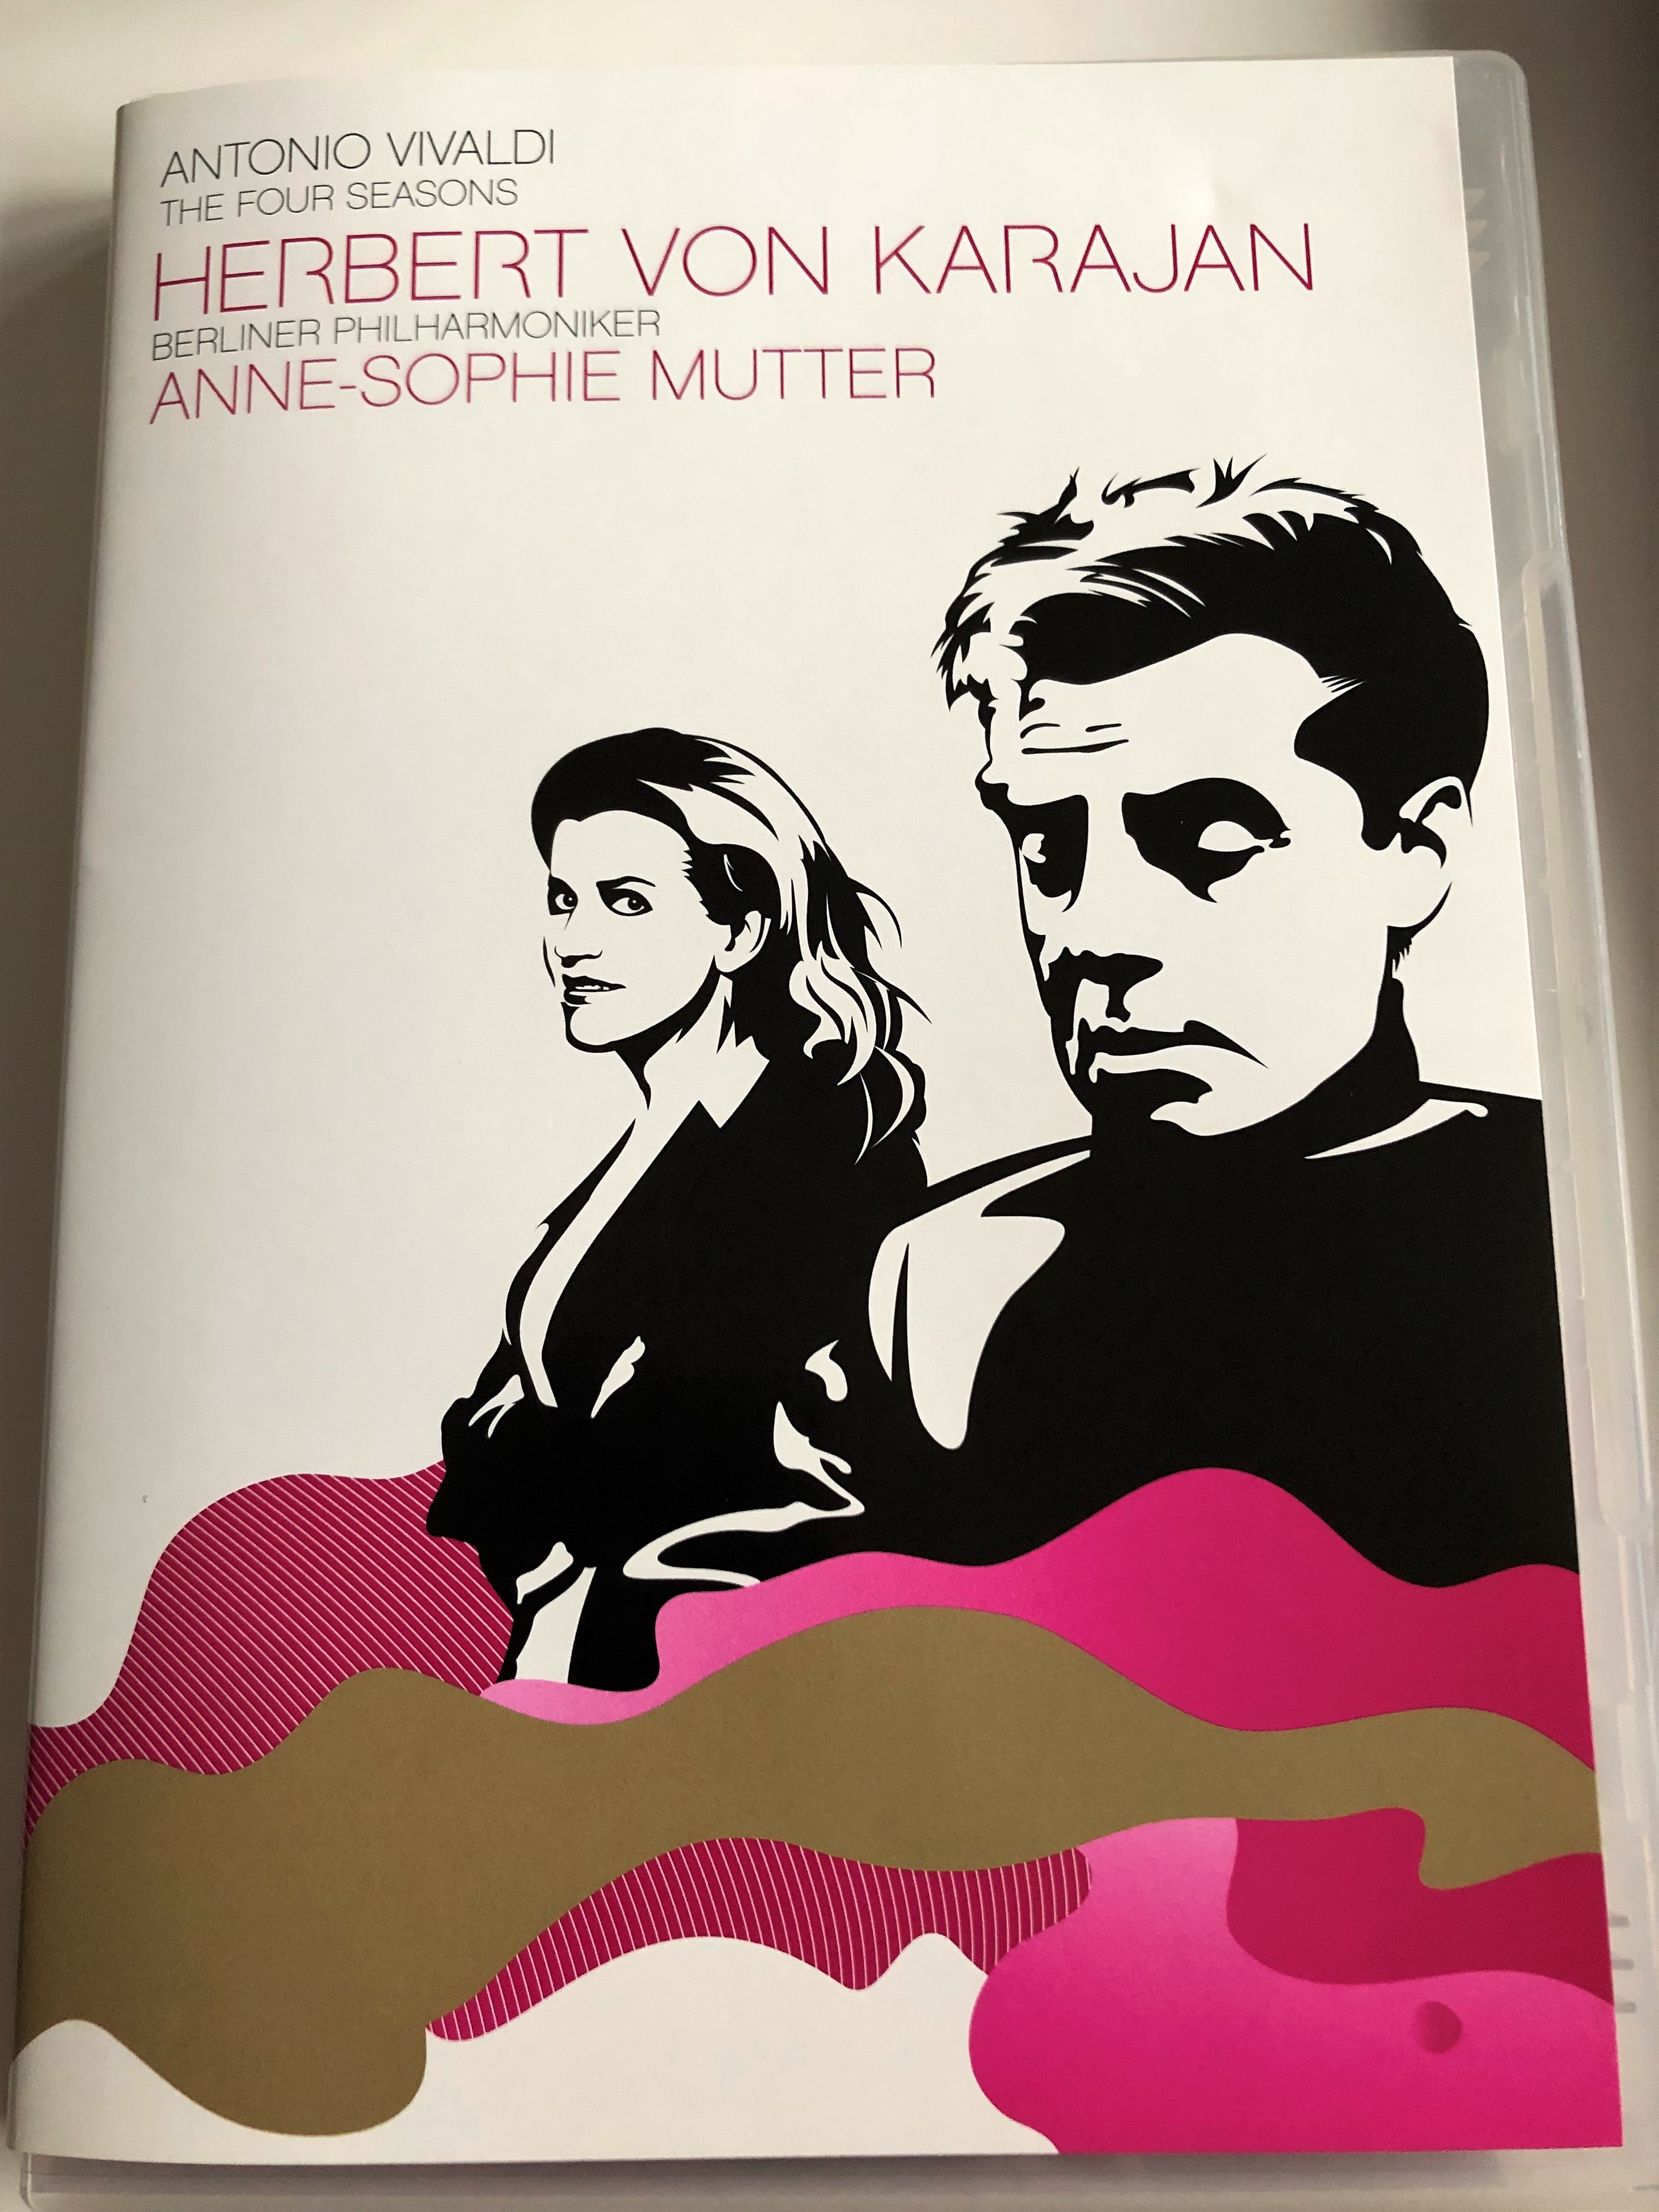 Antonio Vivaldi / The Four Seasons / DVD 2015 / Herbert Von Karajan &  Anne-Sophie Mutter (Violin) / Berlin Philharmoniker / Sony Classical -  bibleinmylanguage